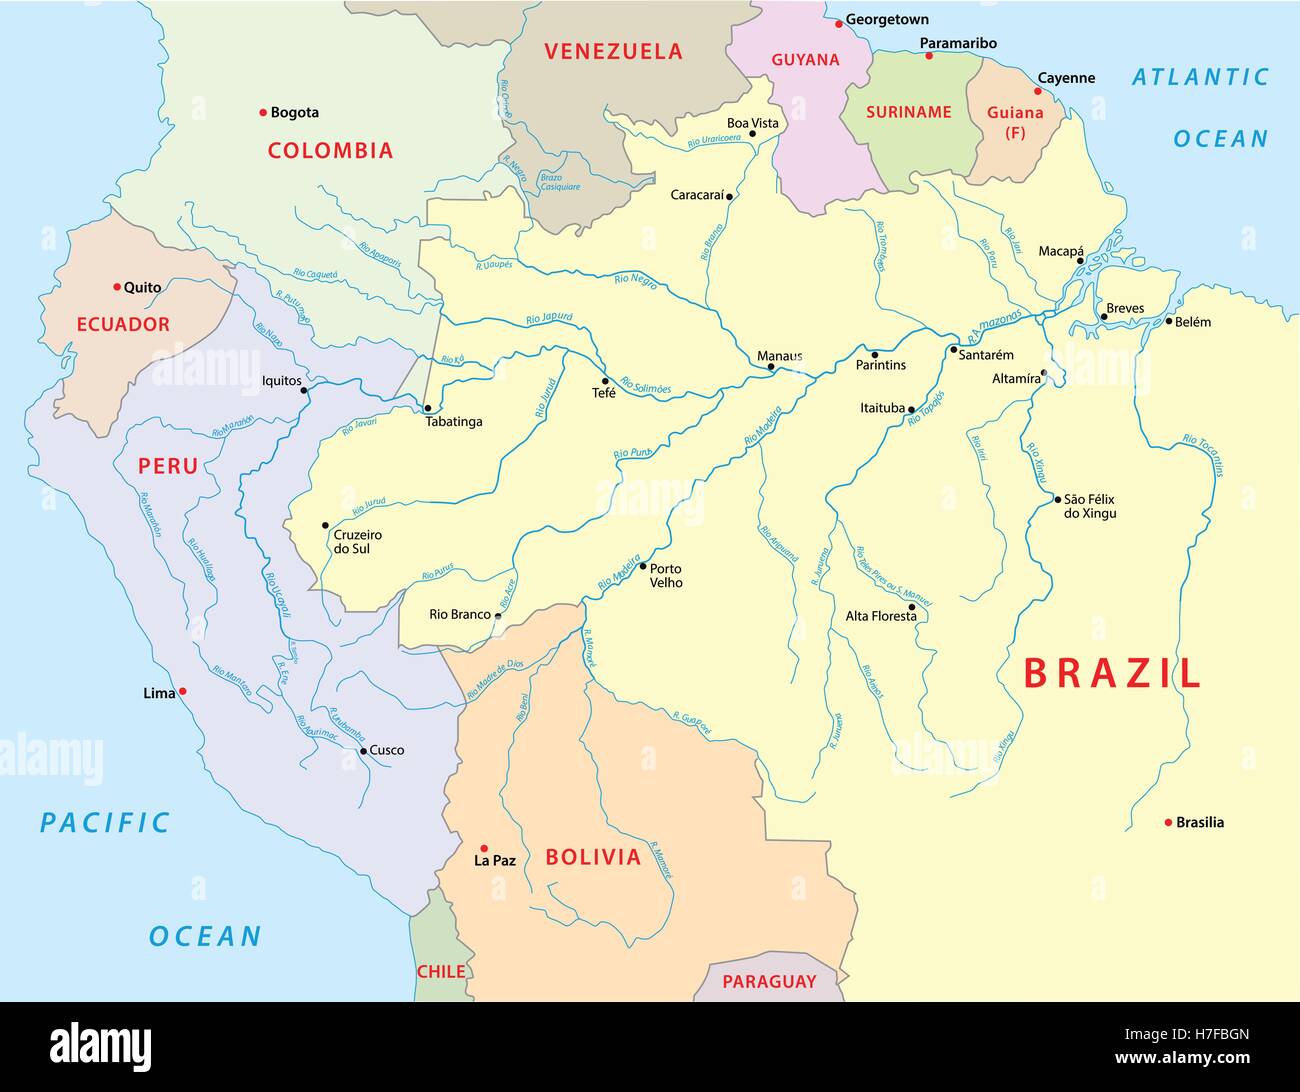 Amazonas River Karte Stock-Vektorgrafik - Alamy